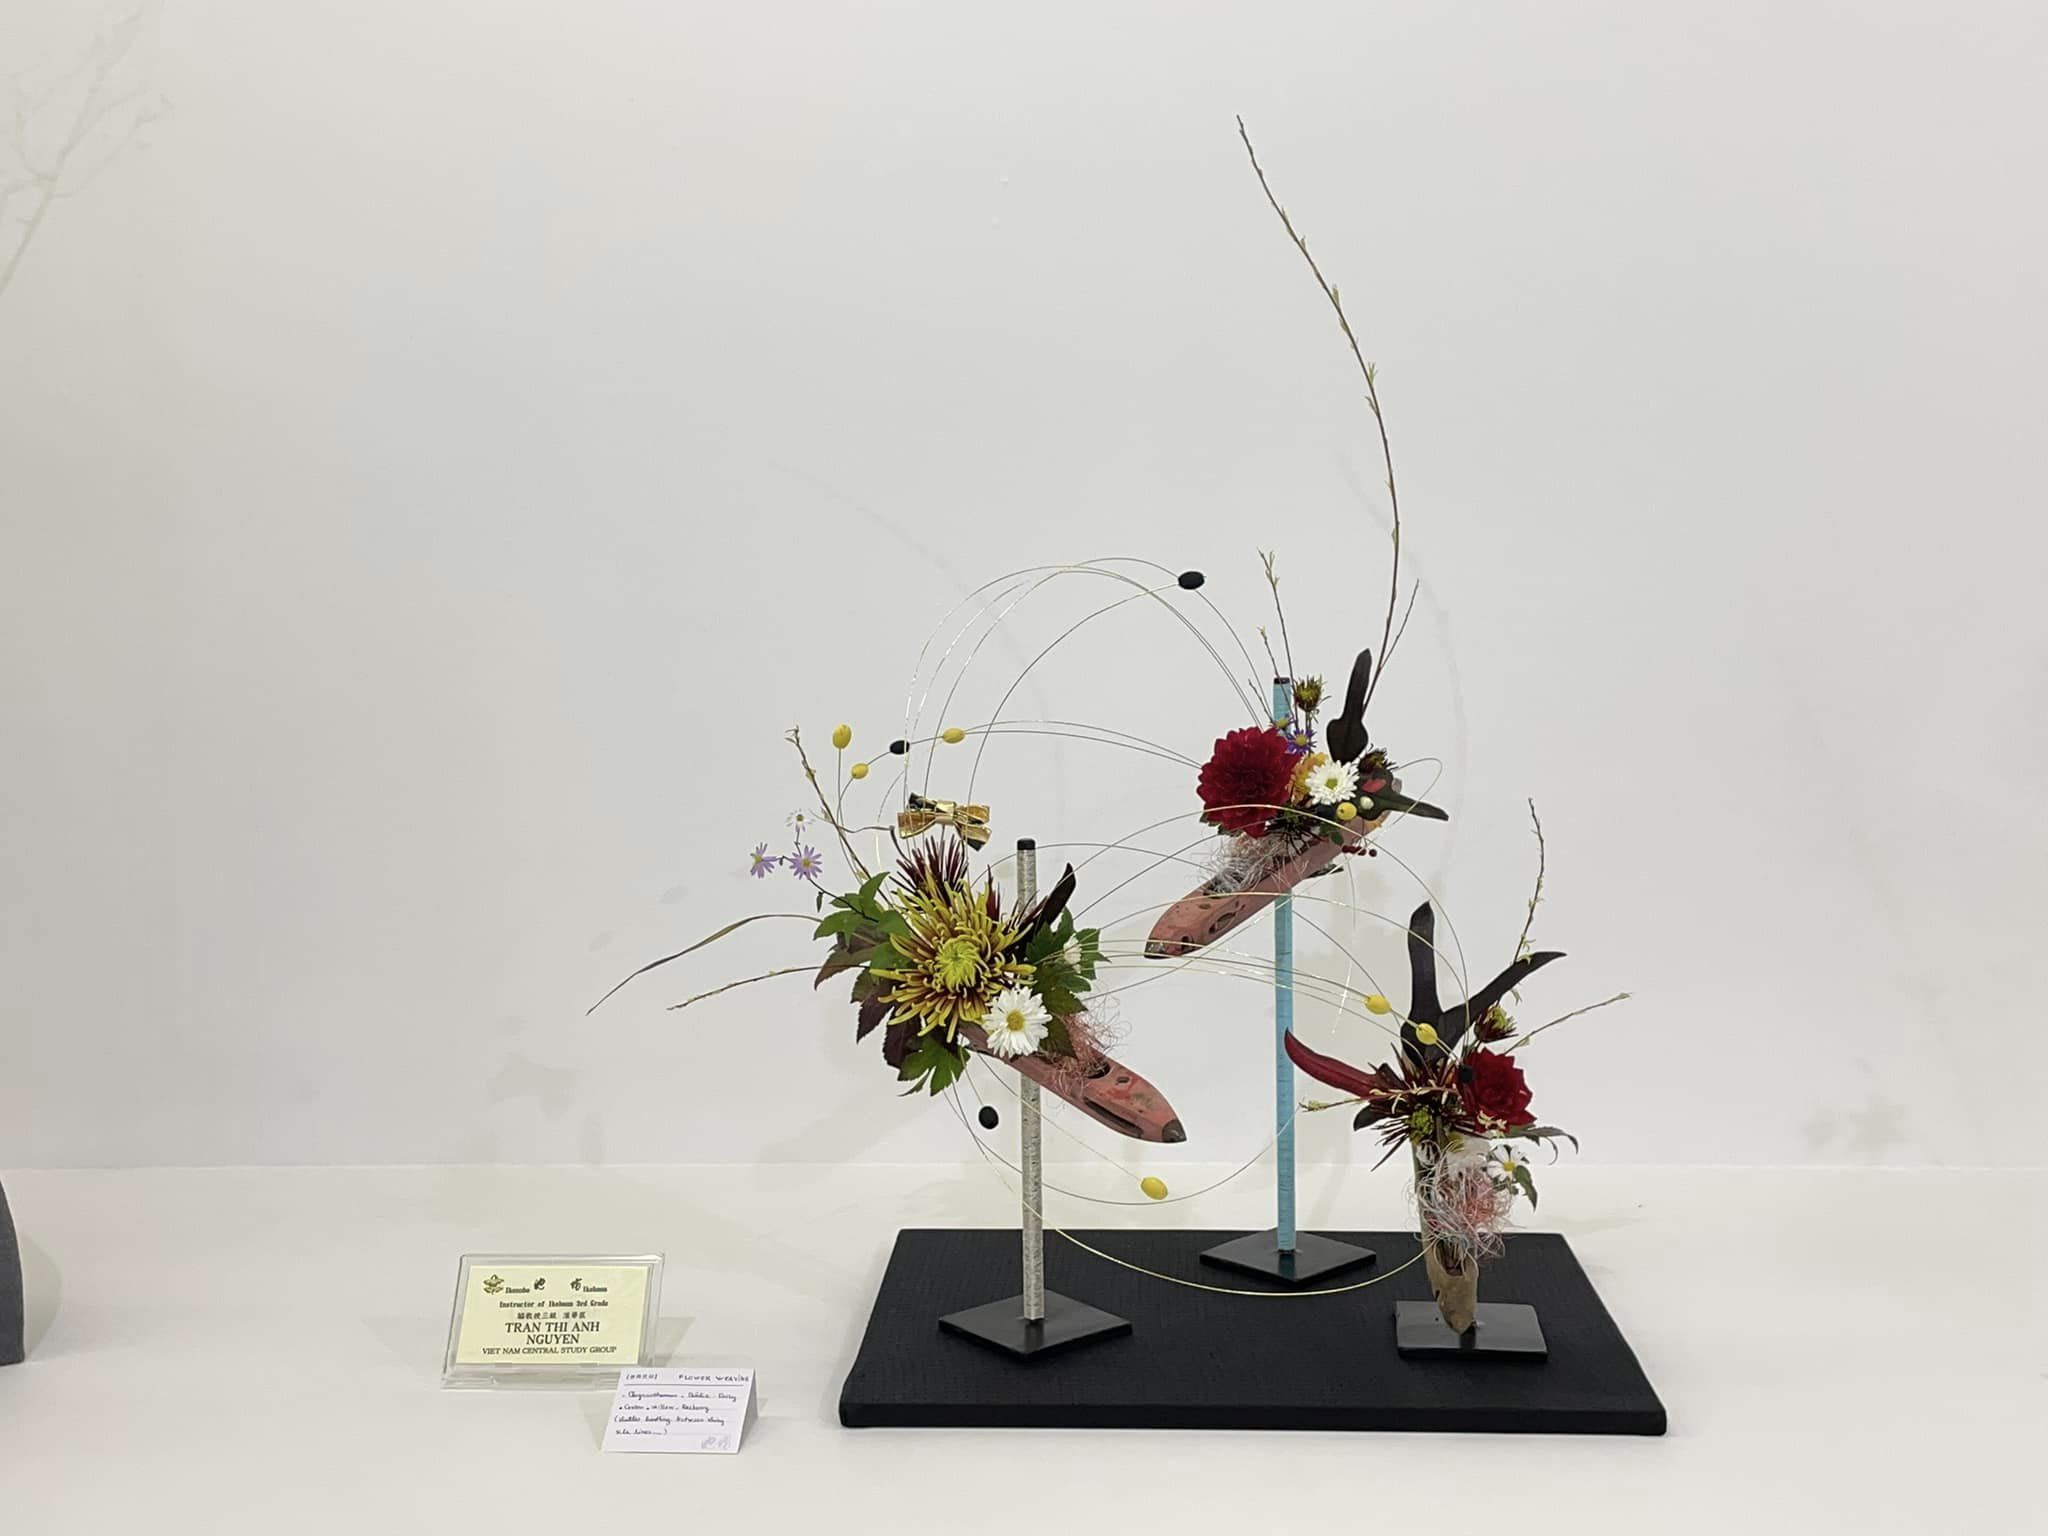 First Vietnamese flower arrangements on display in Japan